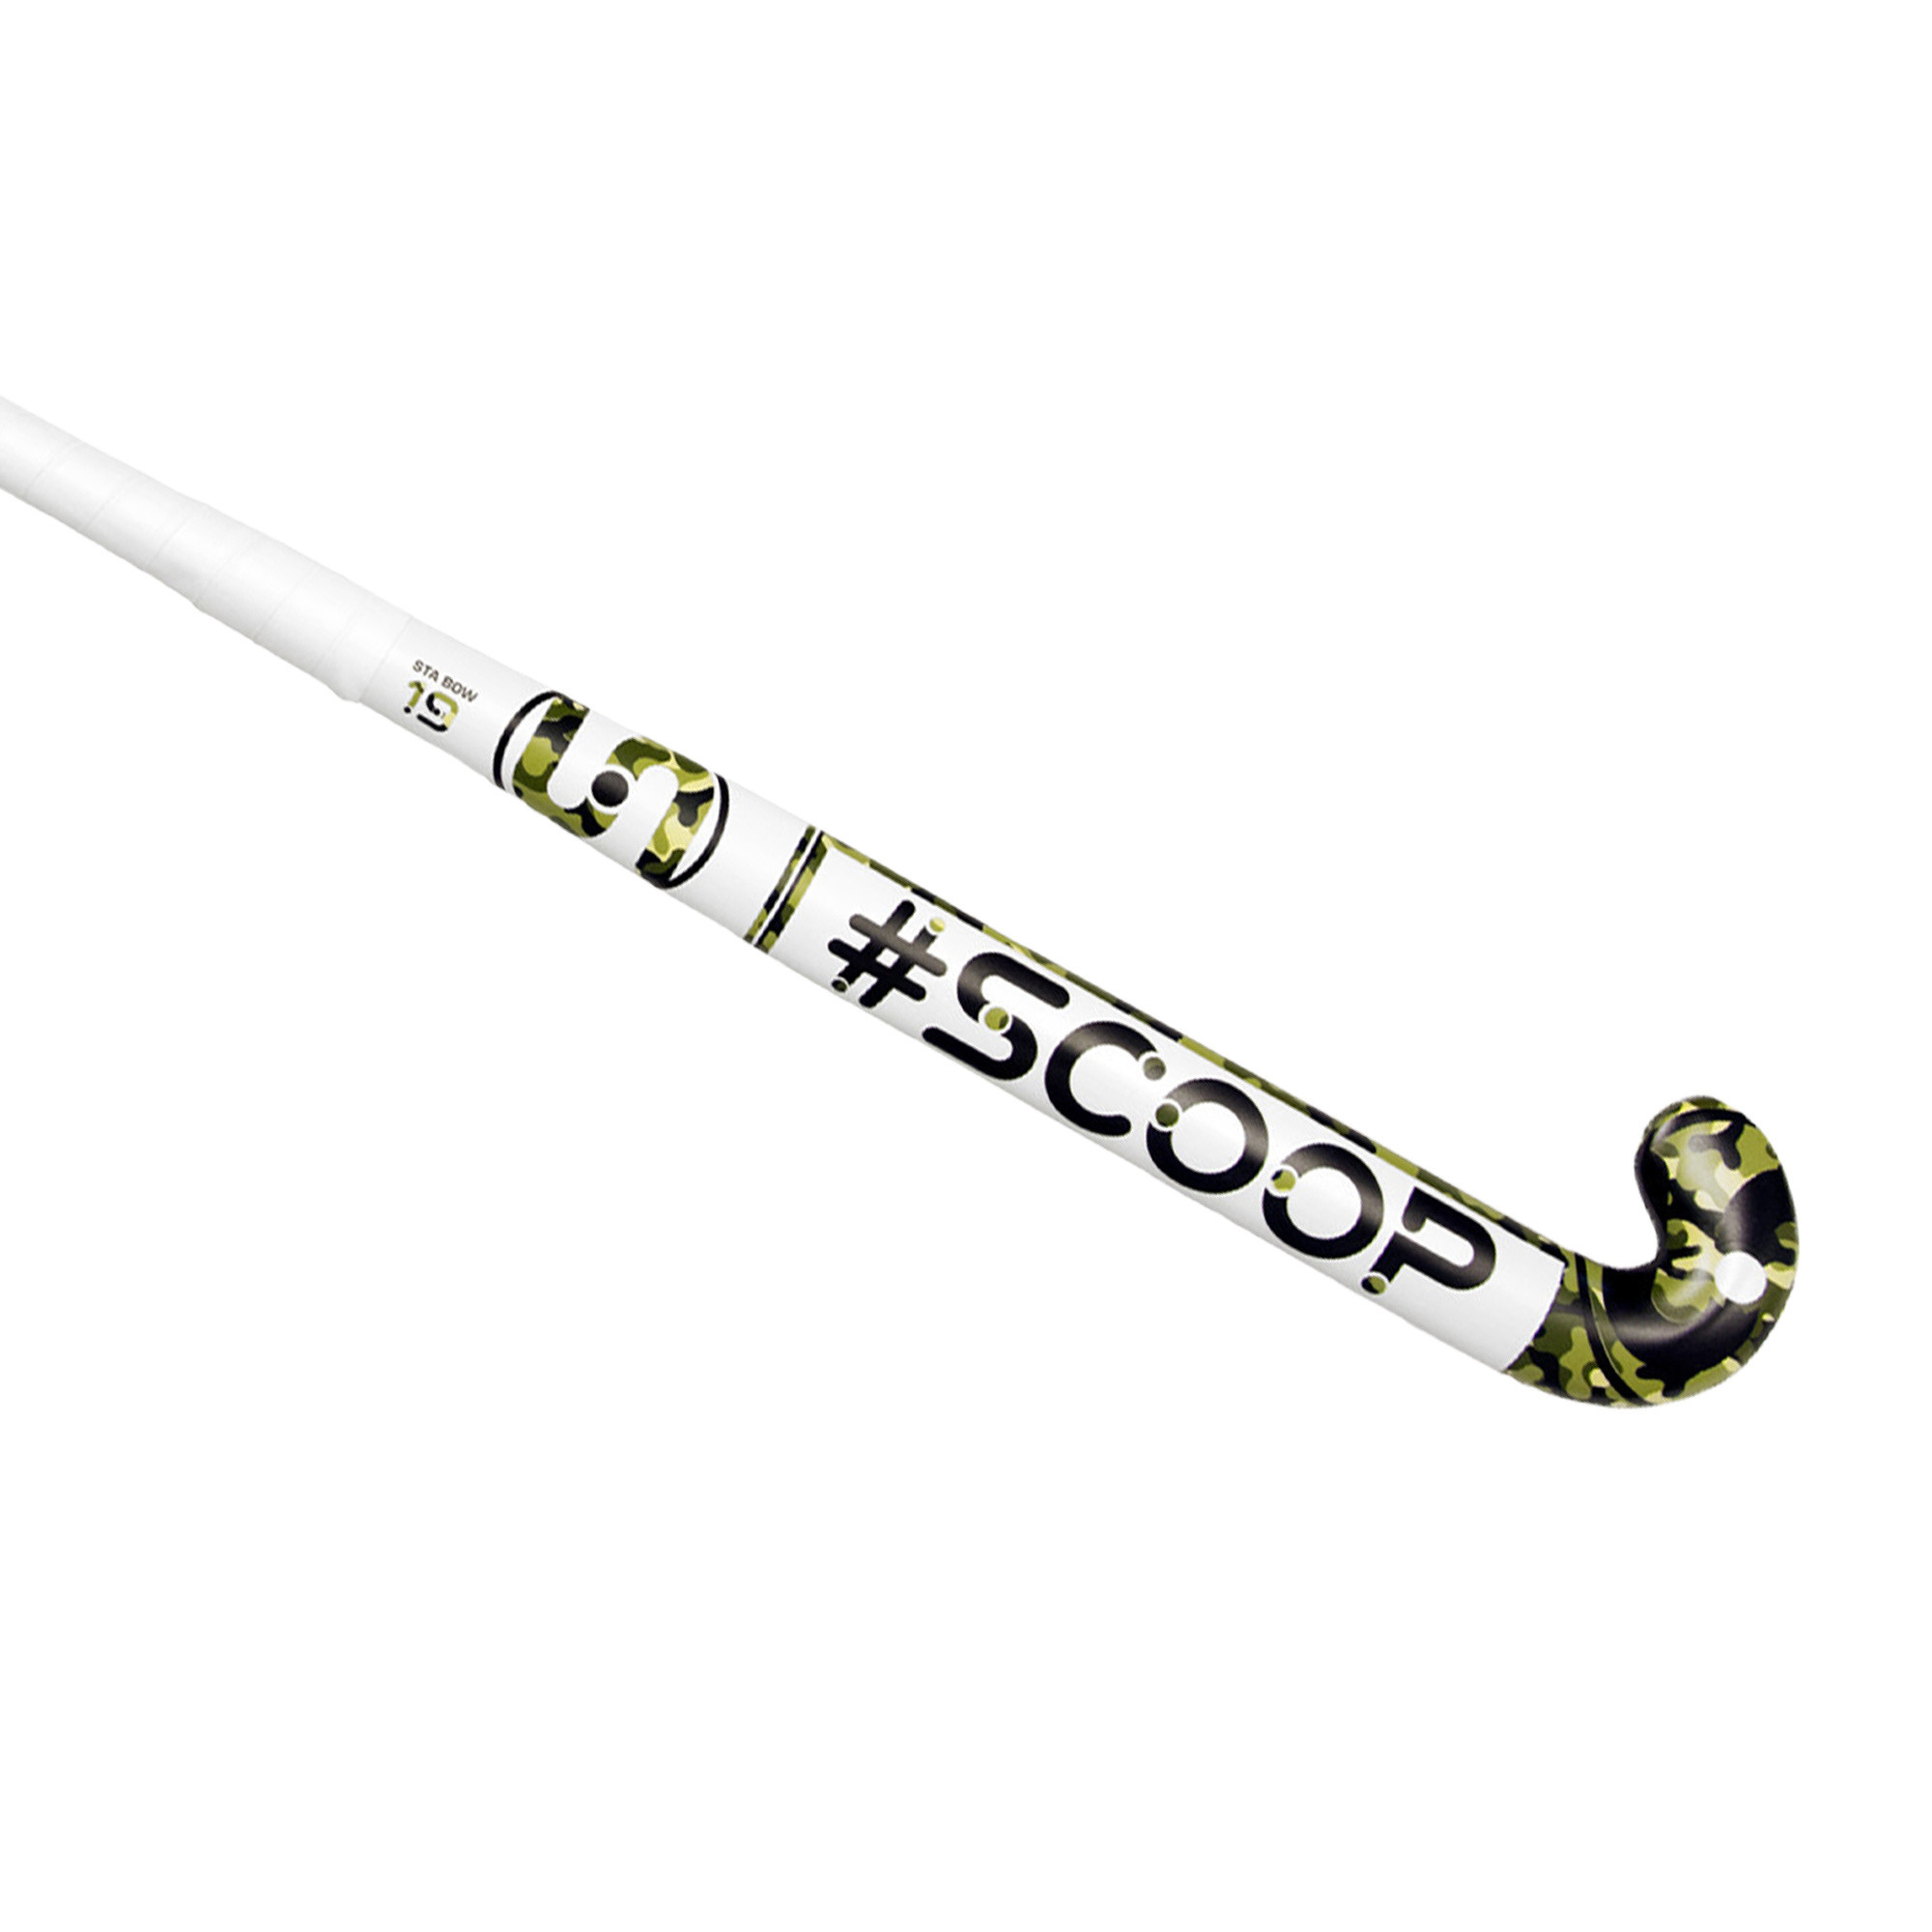 Geplooid menigte tarief Scoop #40 Hockeystick - Standard Bow - 70% Carbon Hockeystick Senior -  Sportamundo.com